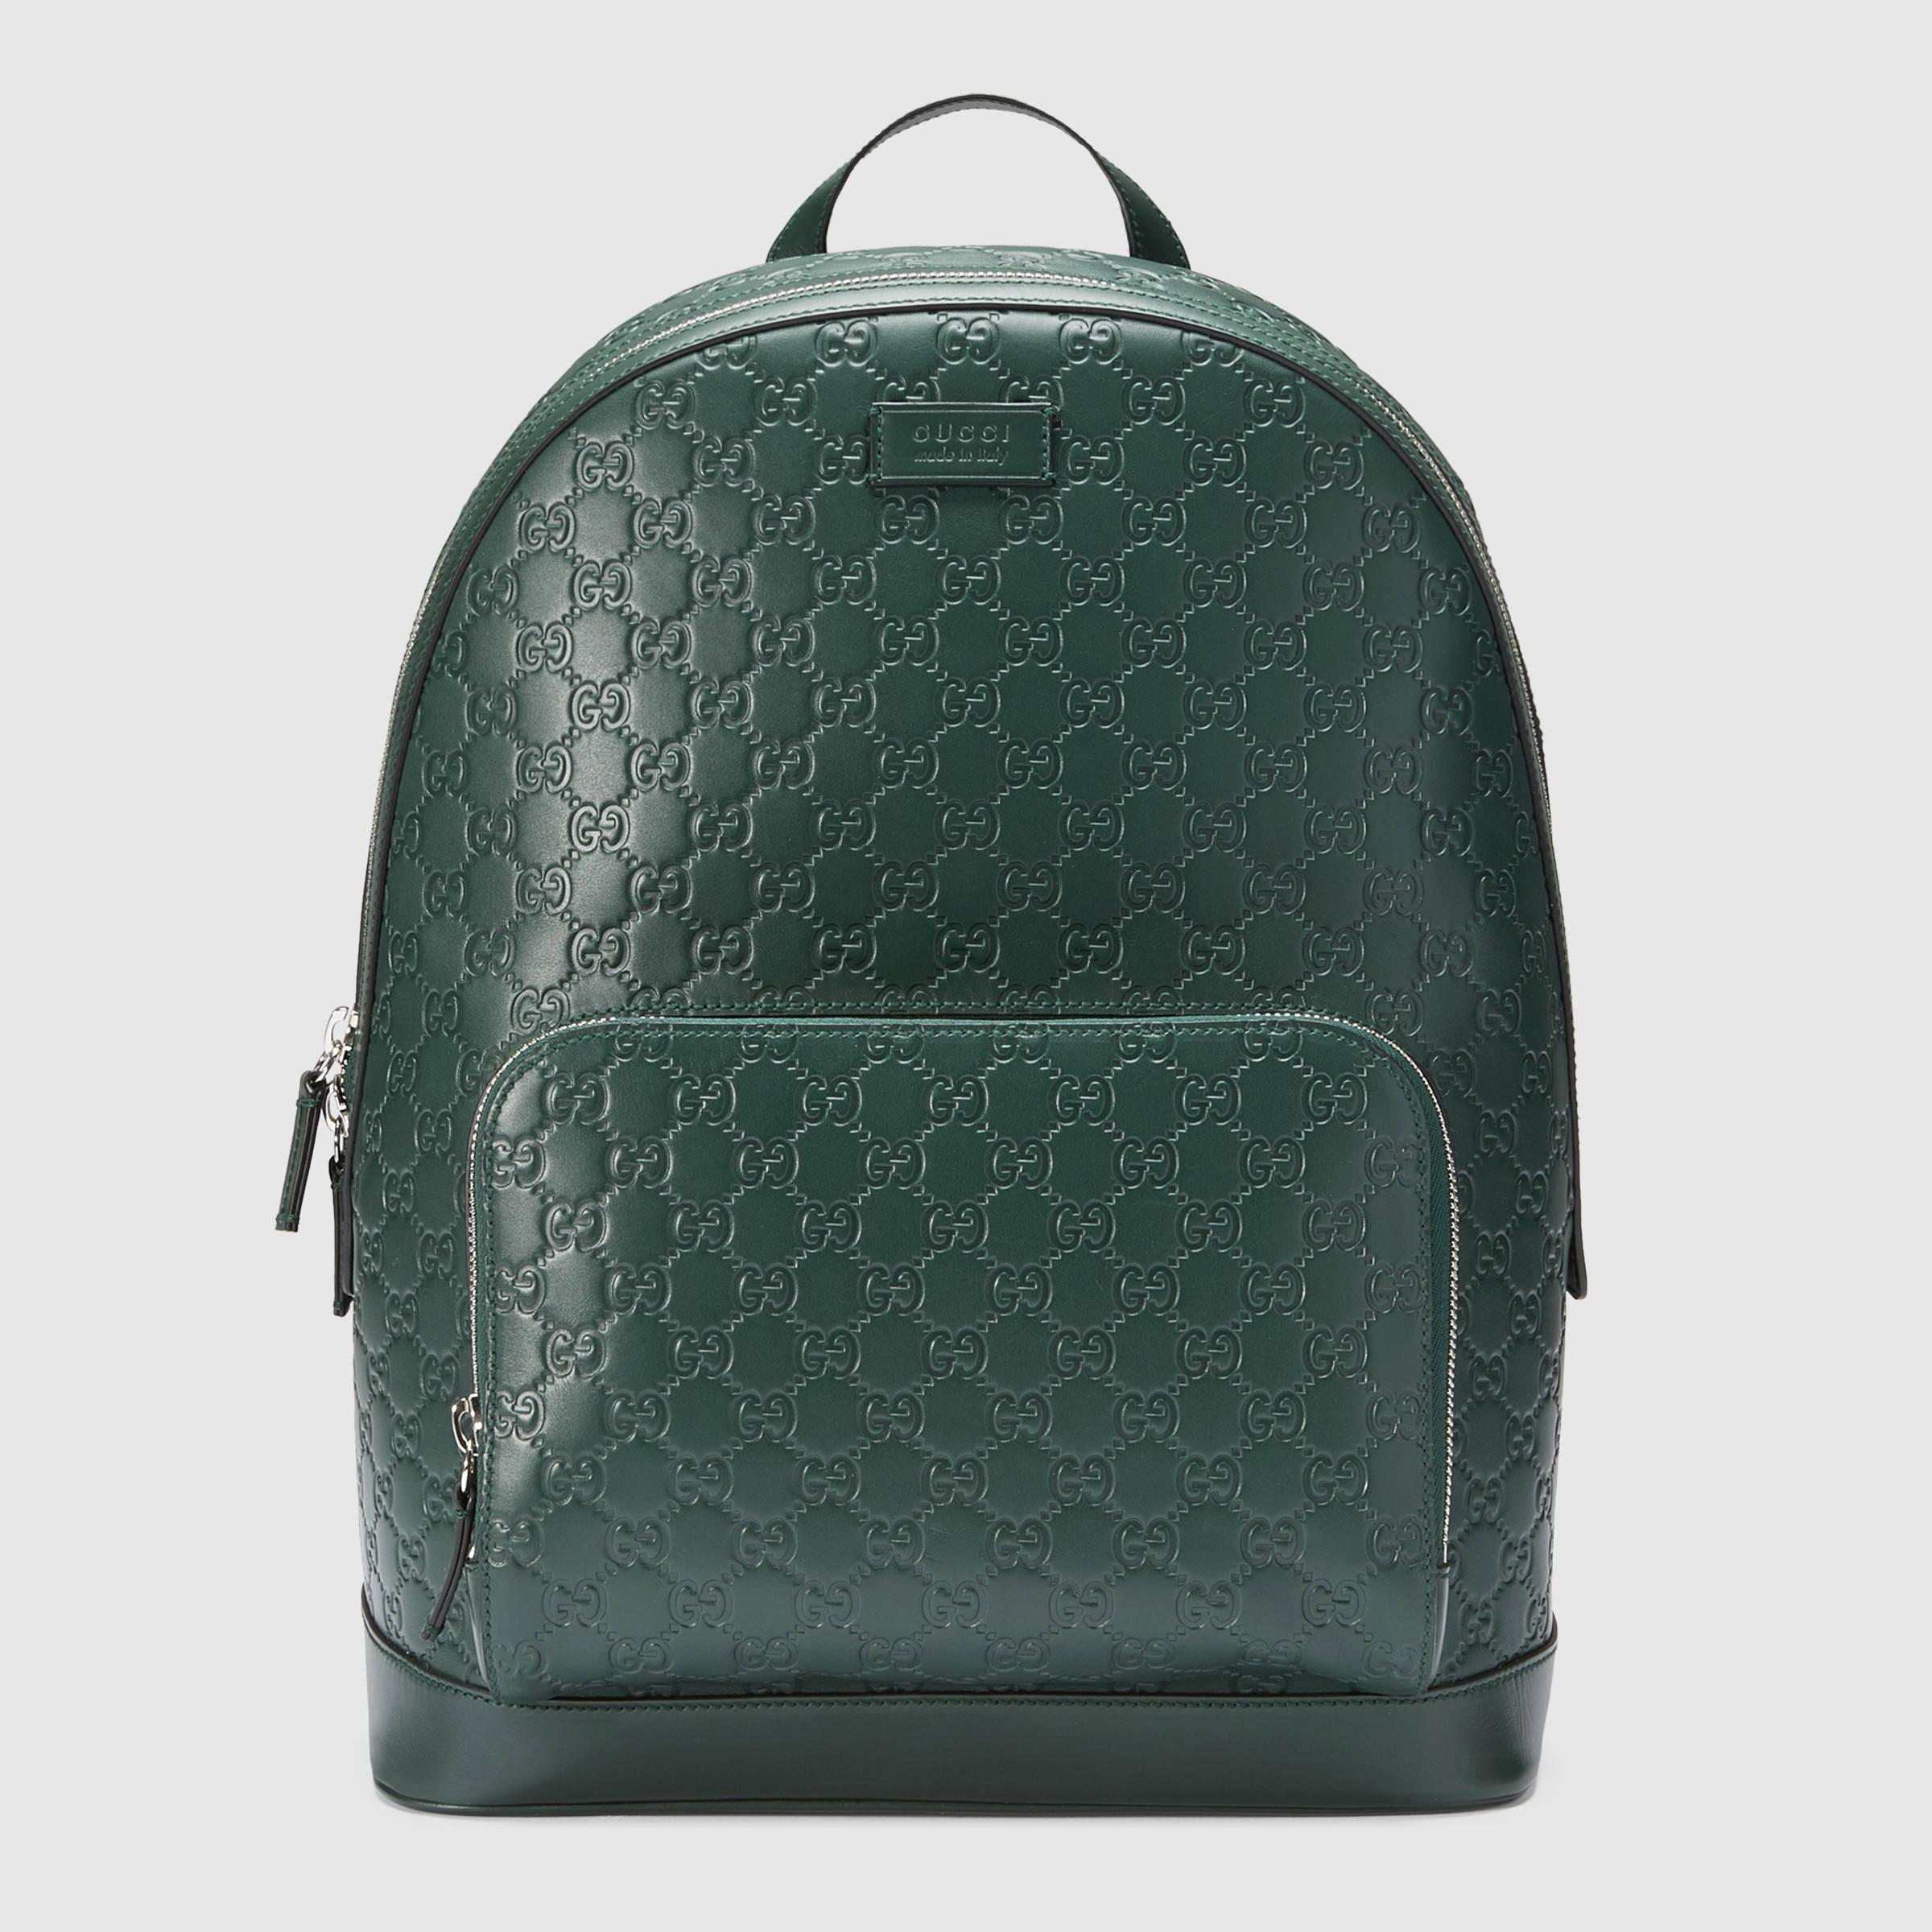 gucci green backpack